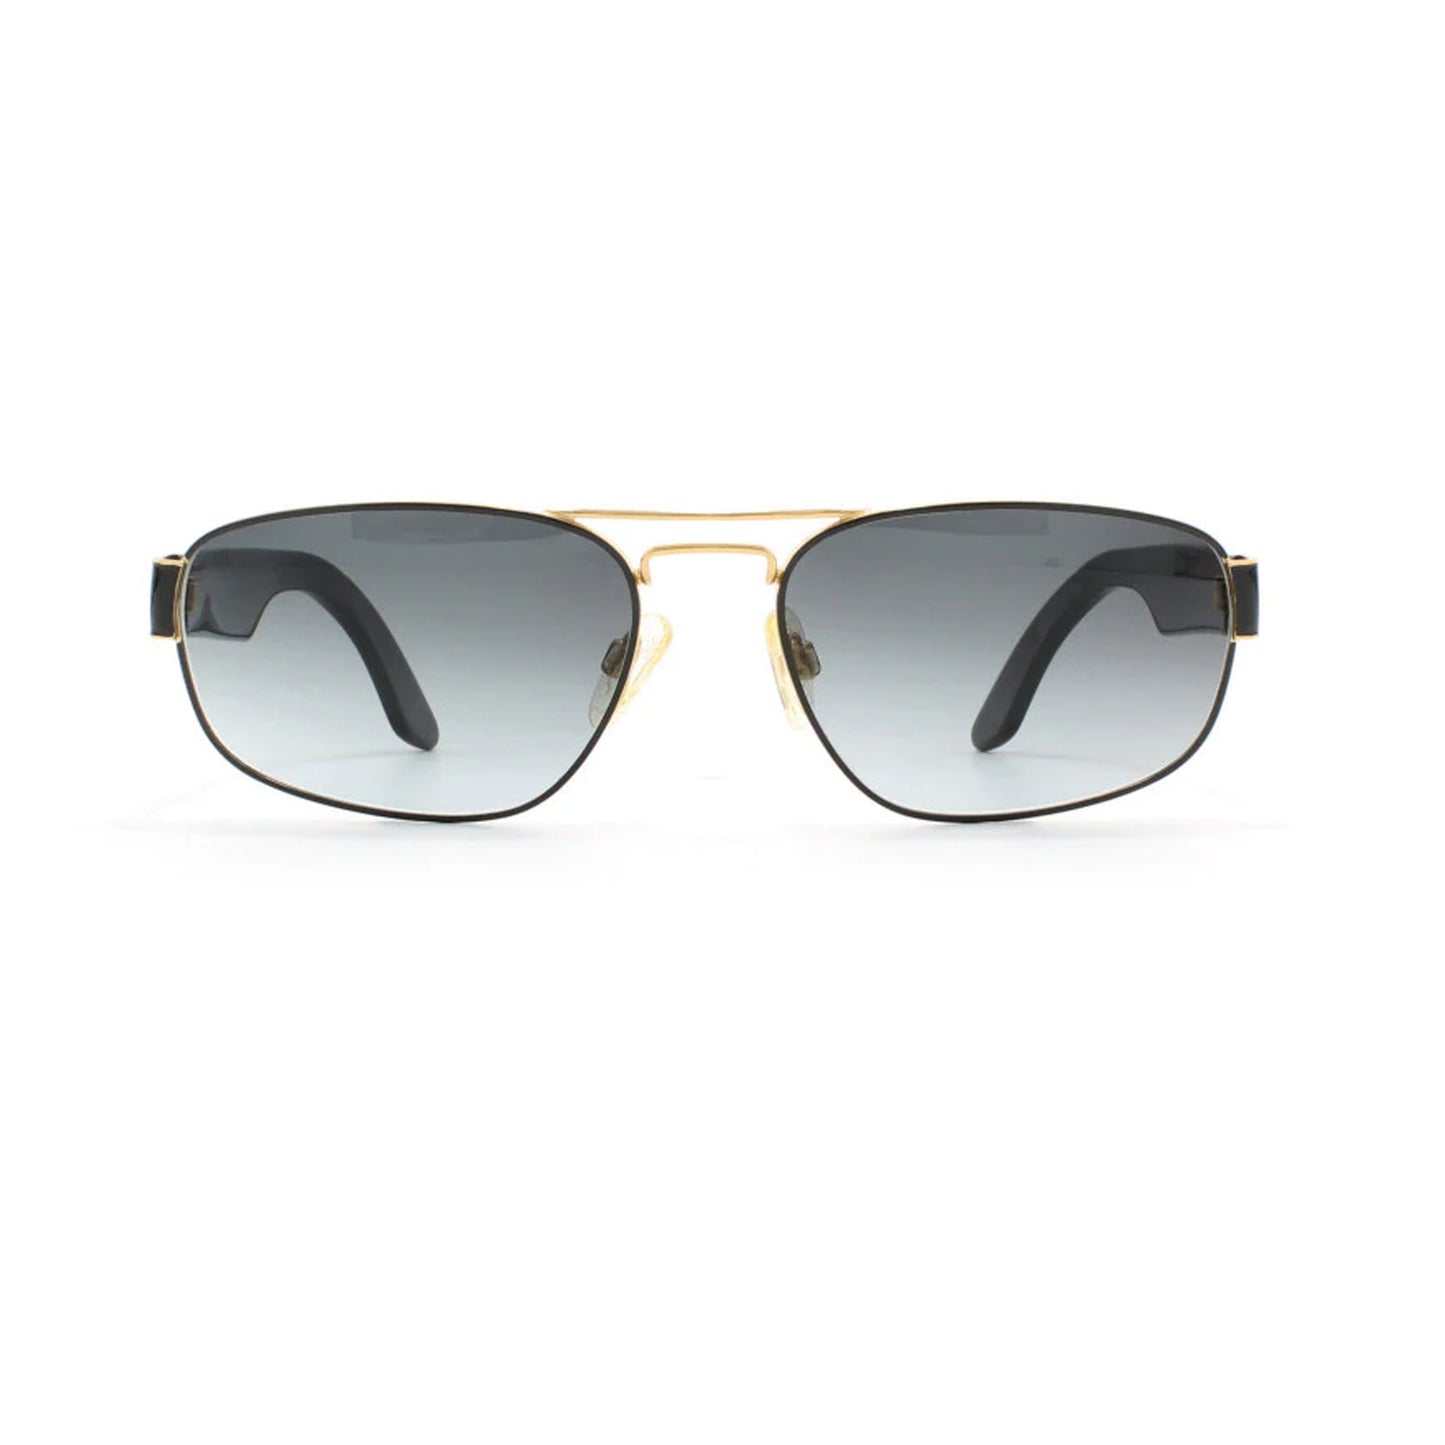 Yves Saint Laurent Black Aviator Metal Full Rim Sunglasses 4016